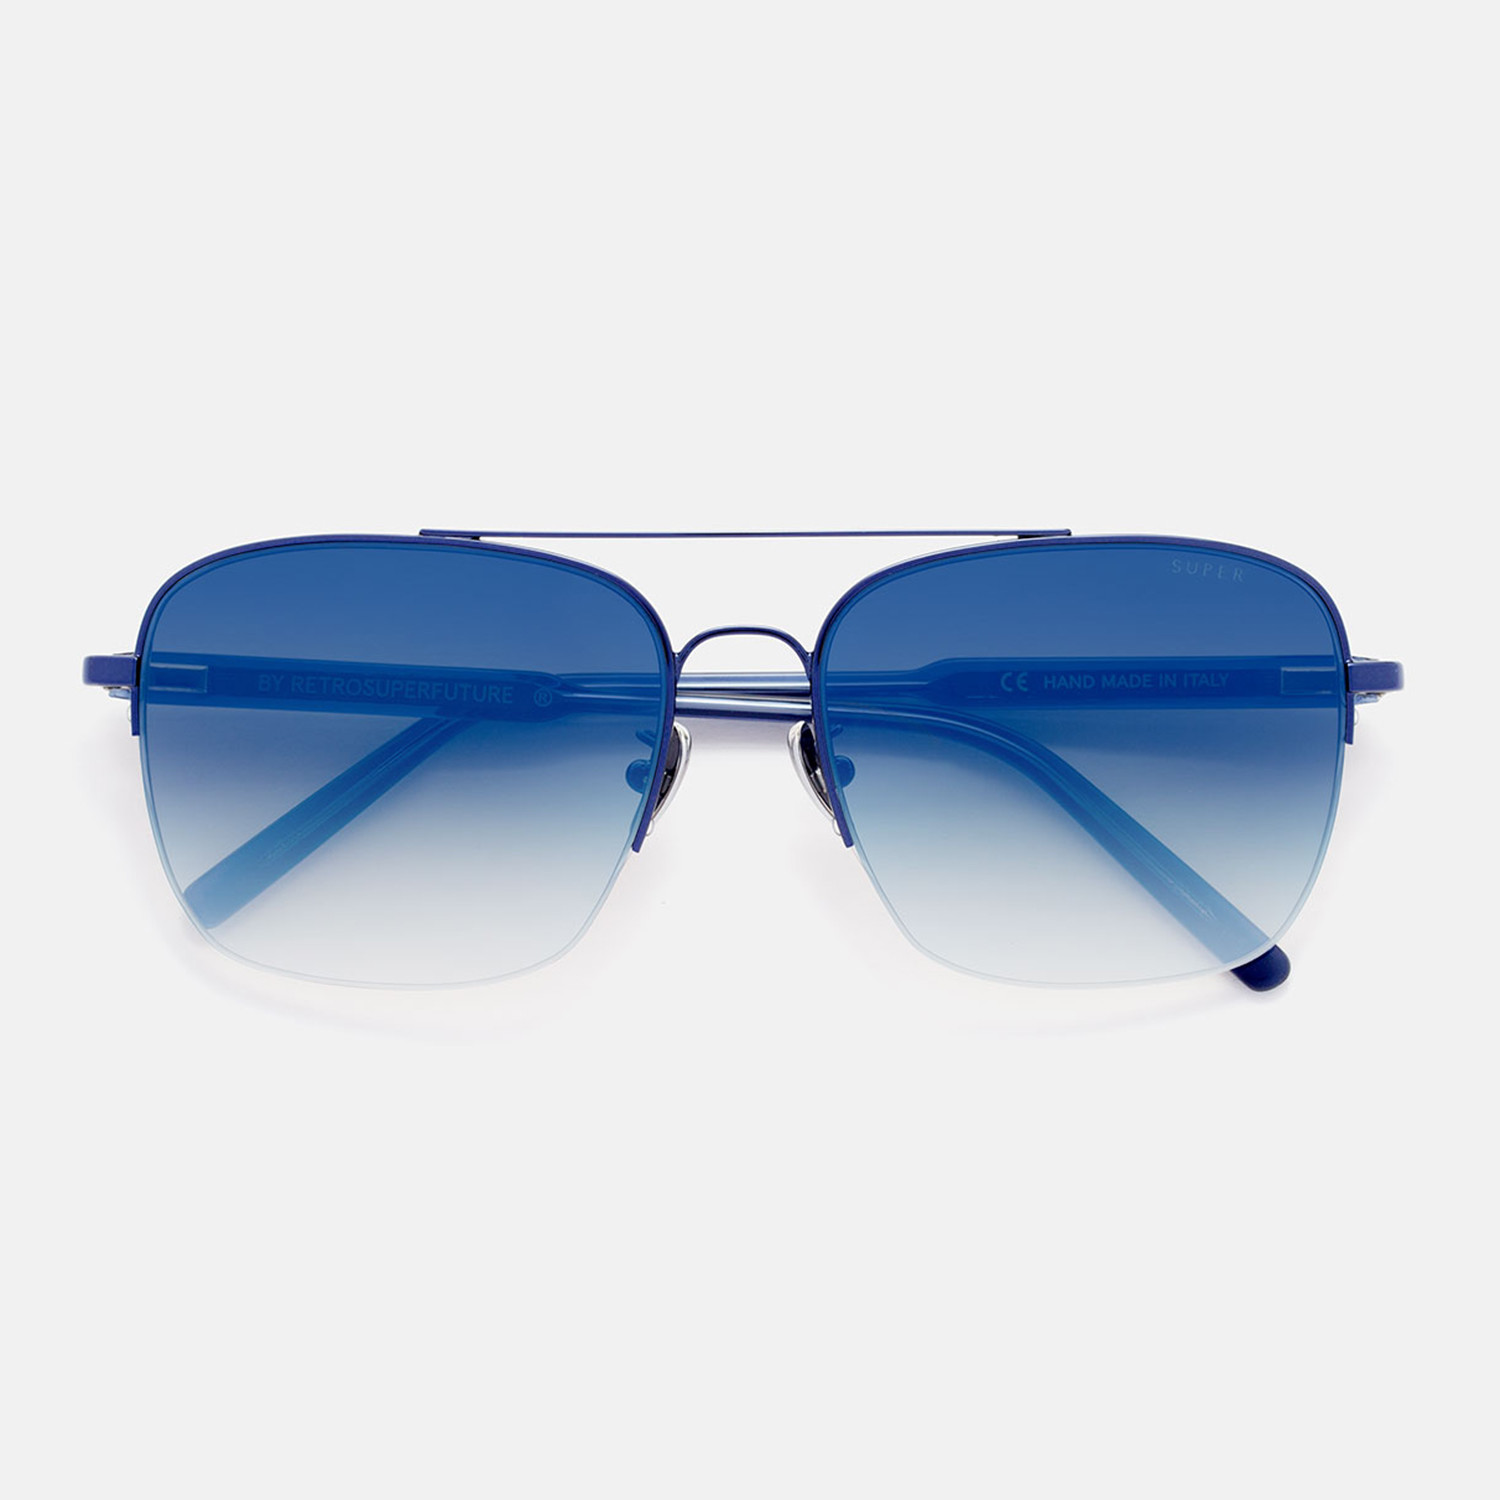 Adamo Sunglasses // Low Bridge Fit (Fadeism Black) - Super by ...